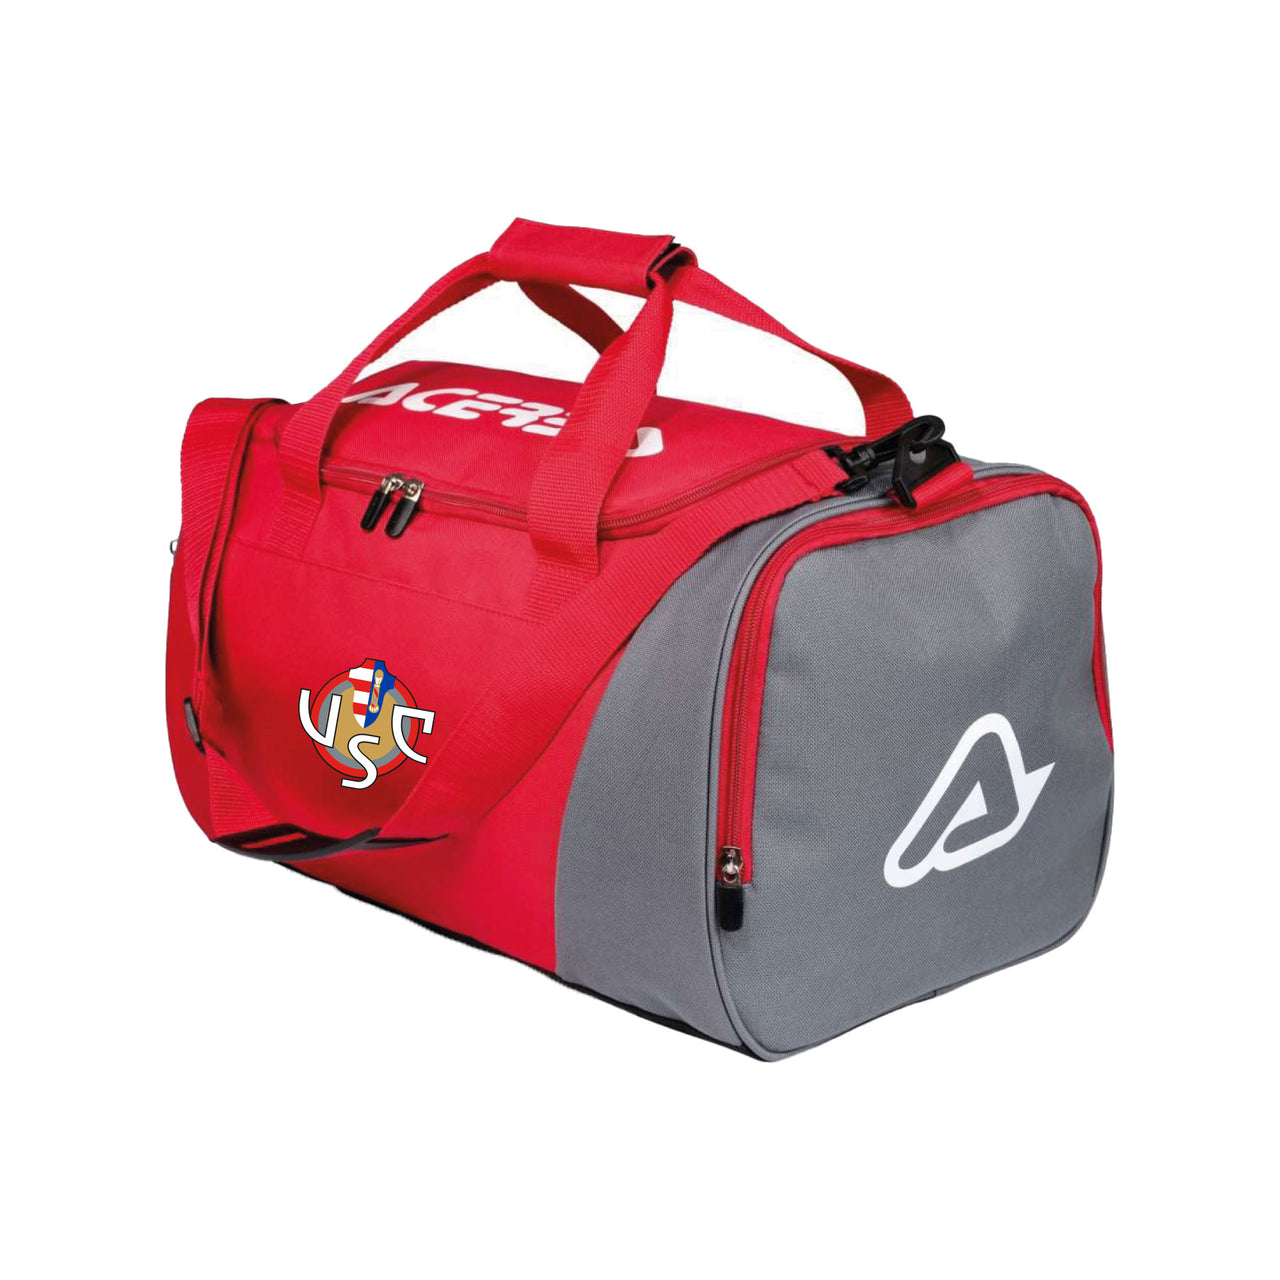 US Cremonese grey-red gym bag